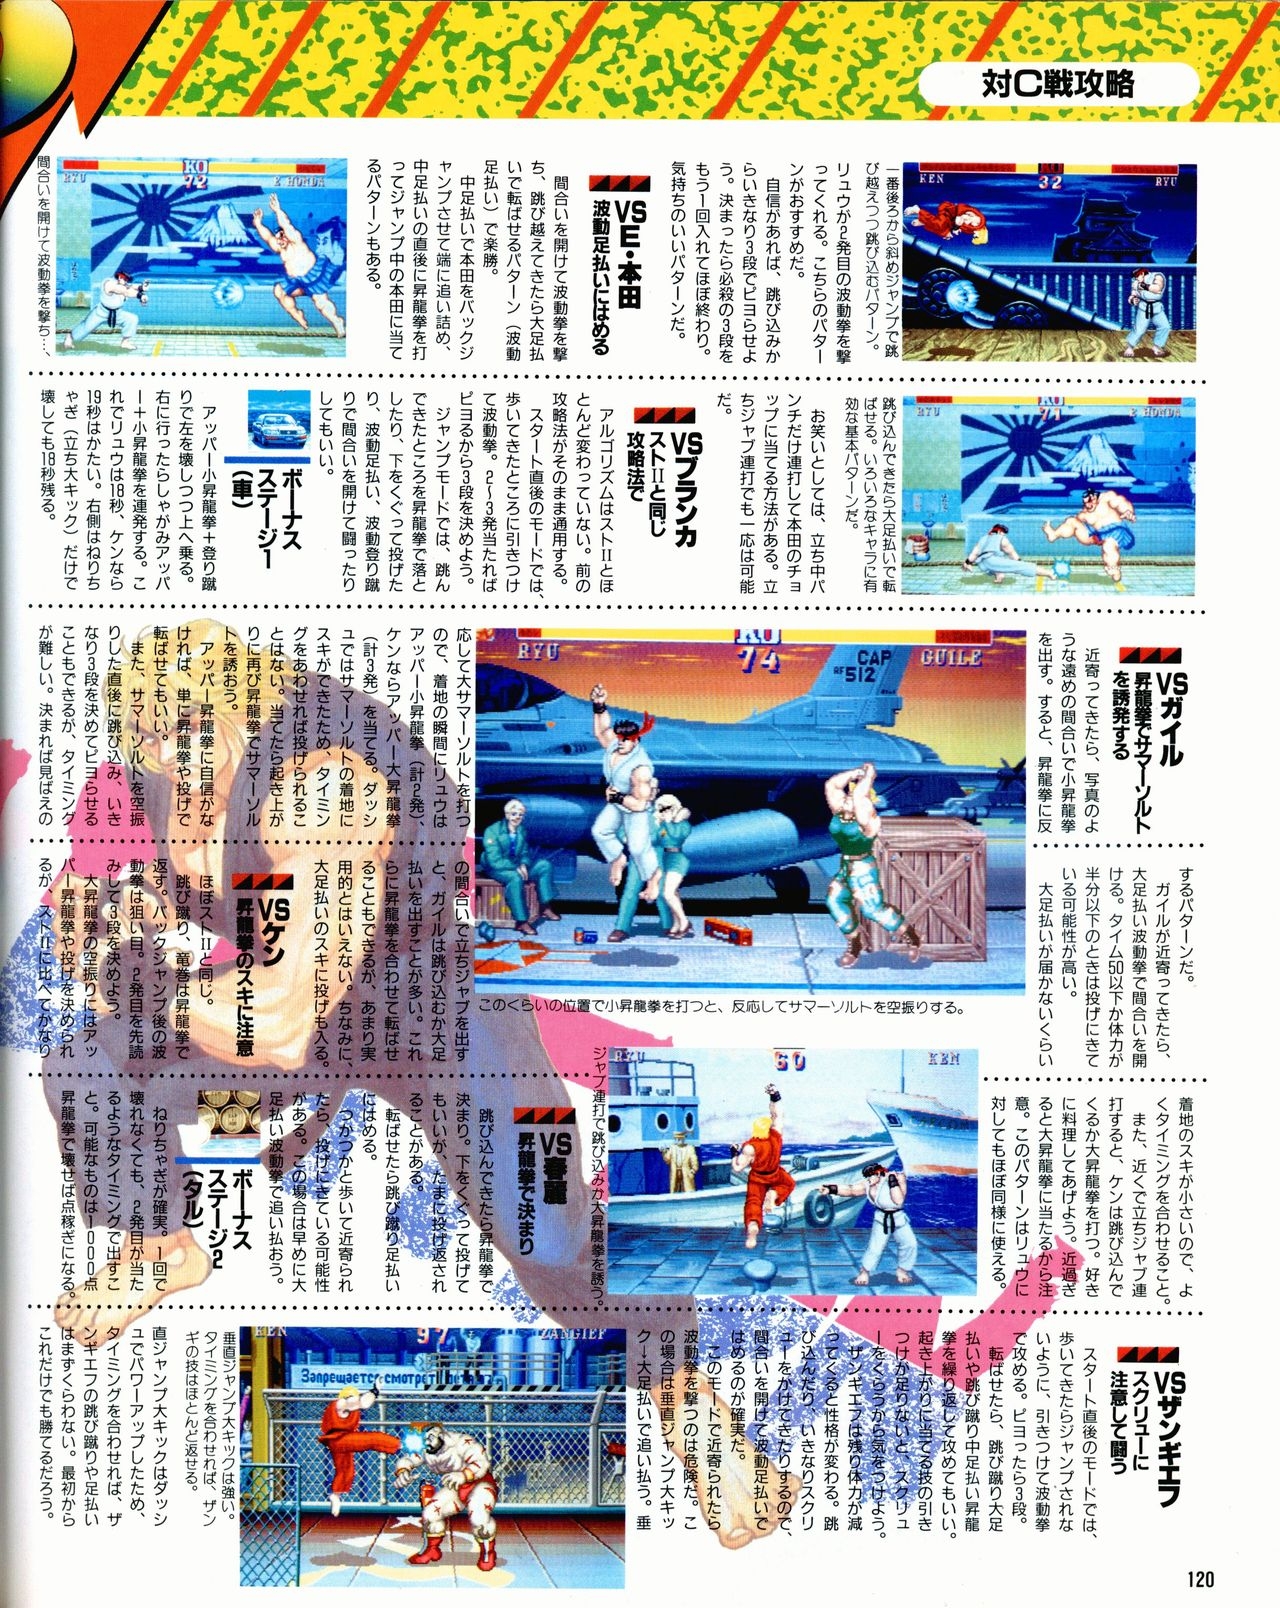 Street Fighter II Dash - Gamest special issue 77 121